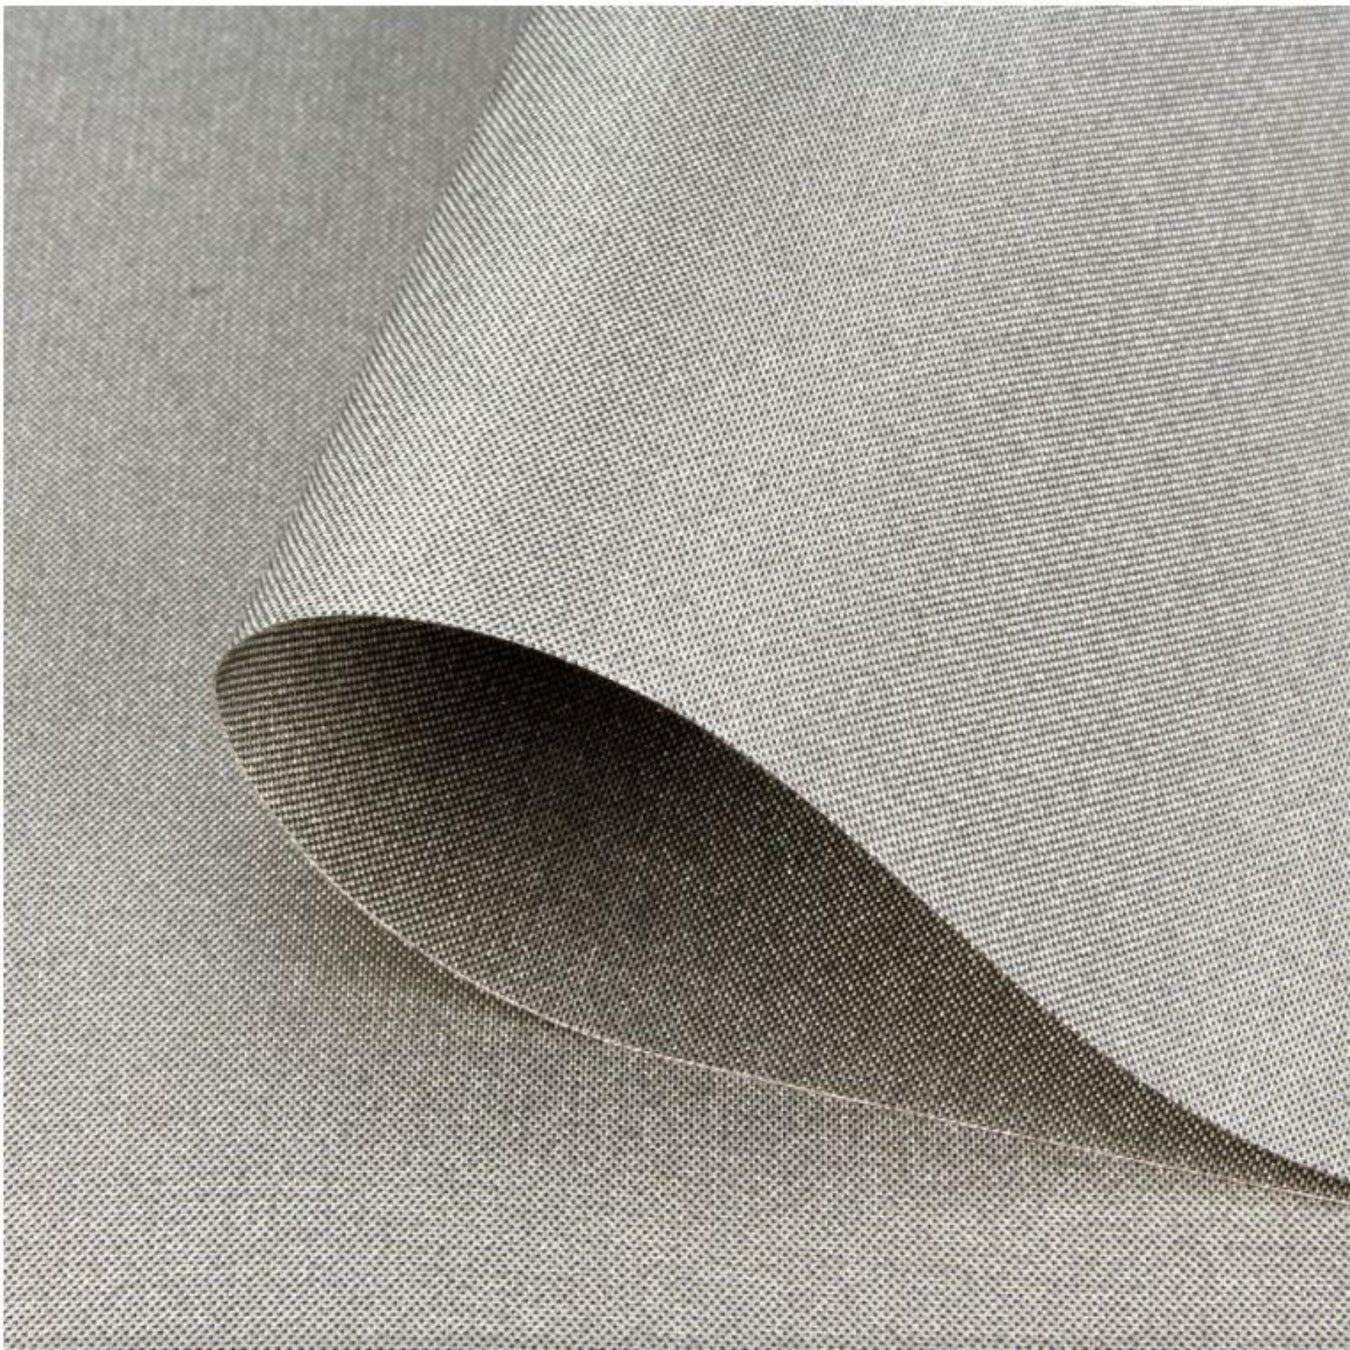 Shielding Metalized Fabric